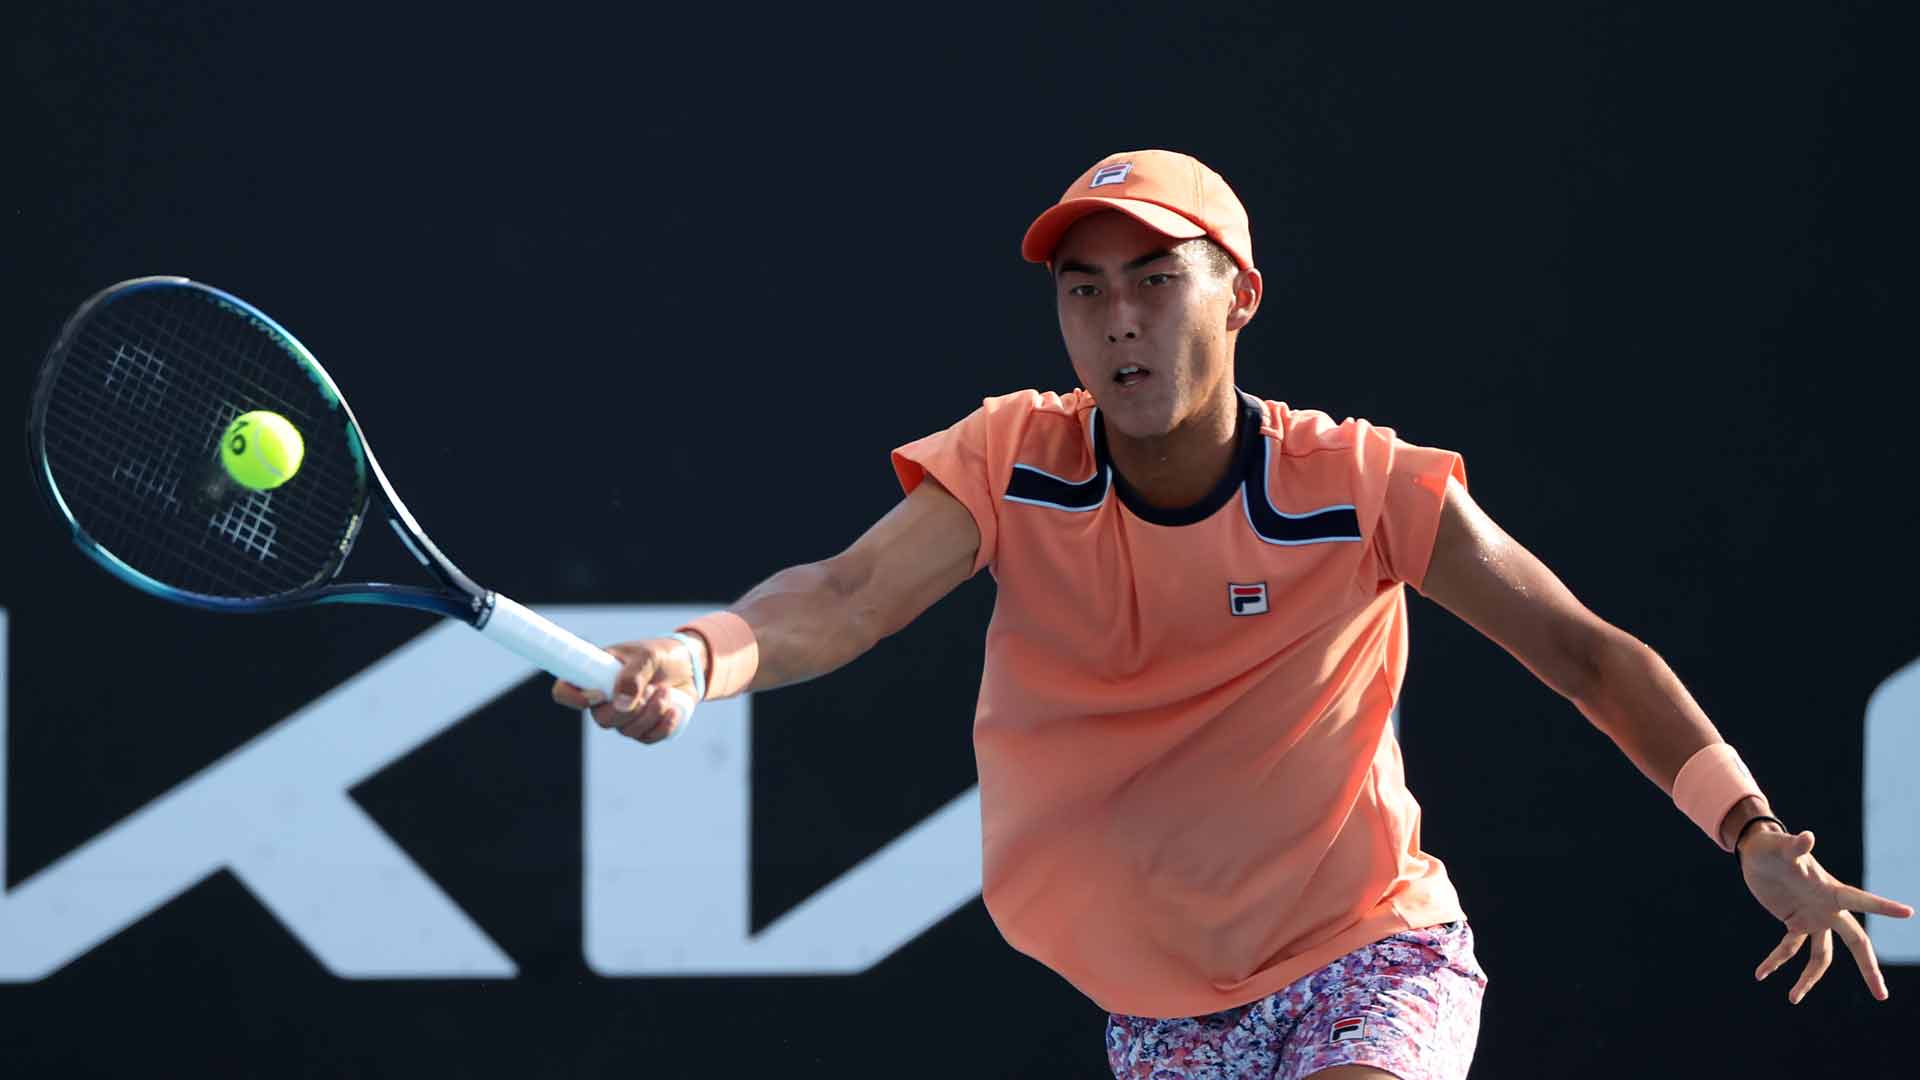 Rinky Hijikata earns a hard-fought five-set victory at the 2023 Australian Open.